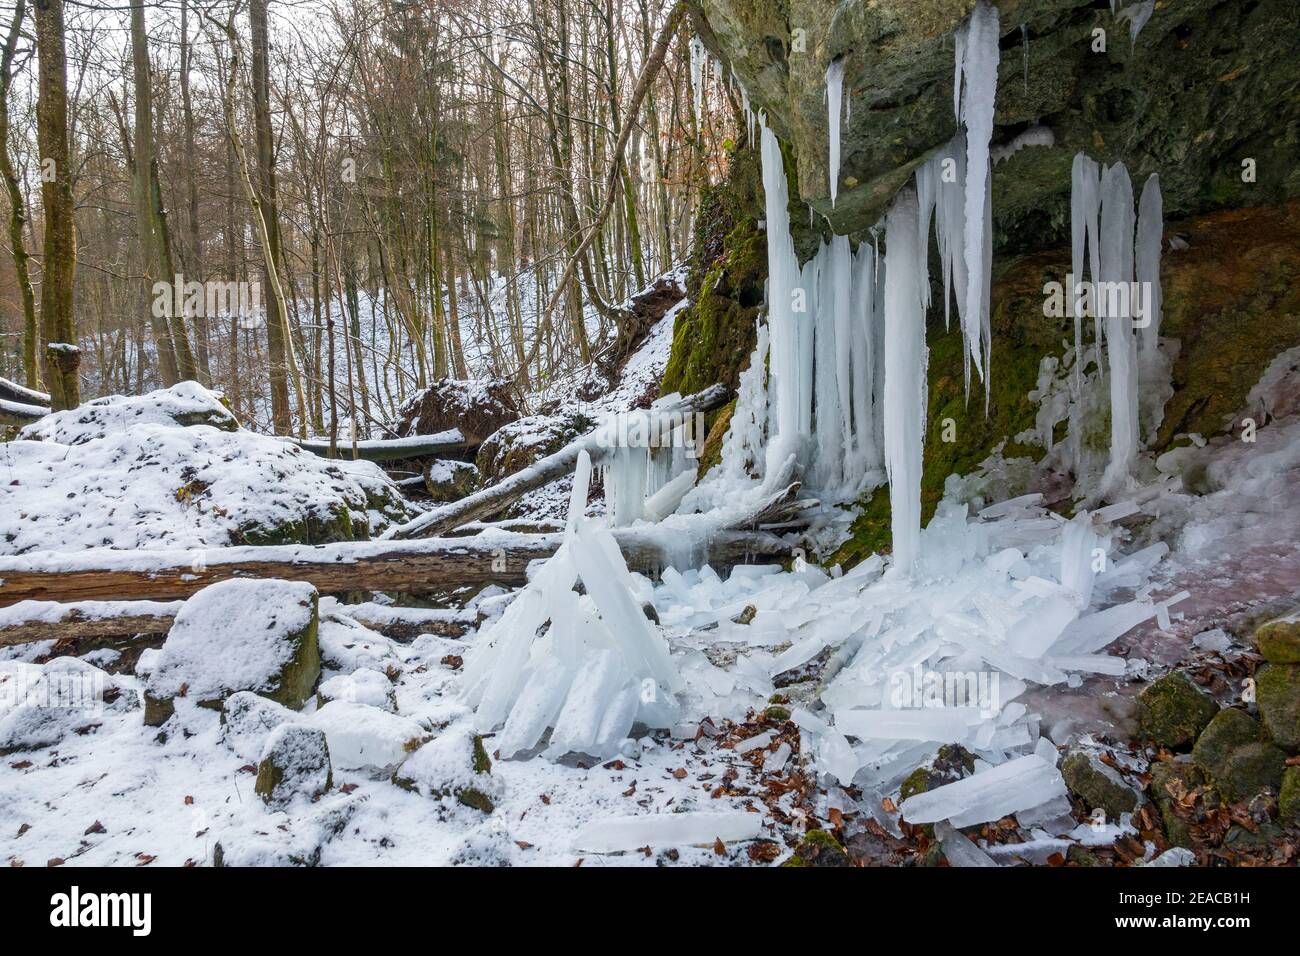 Deutschland, Baden-Württemberg, Reutlingen - Mittelstadt, gefrorener Wasserfall am Merzenbach. Stockfoto